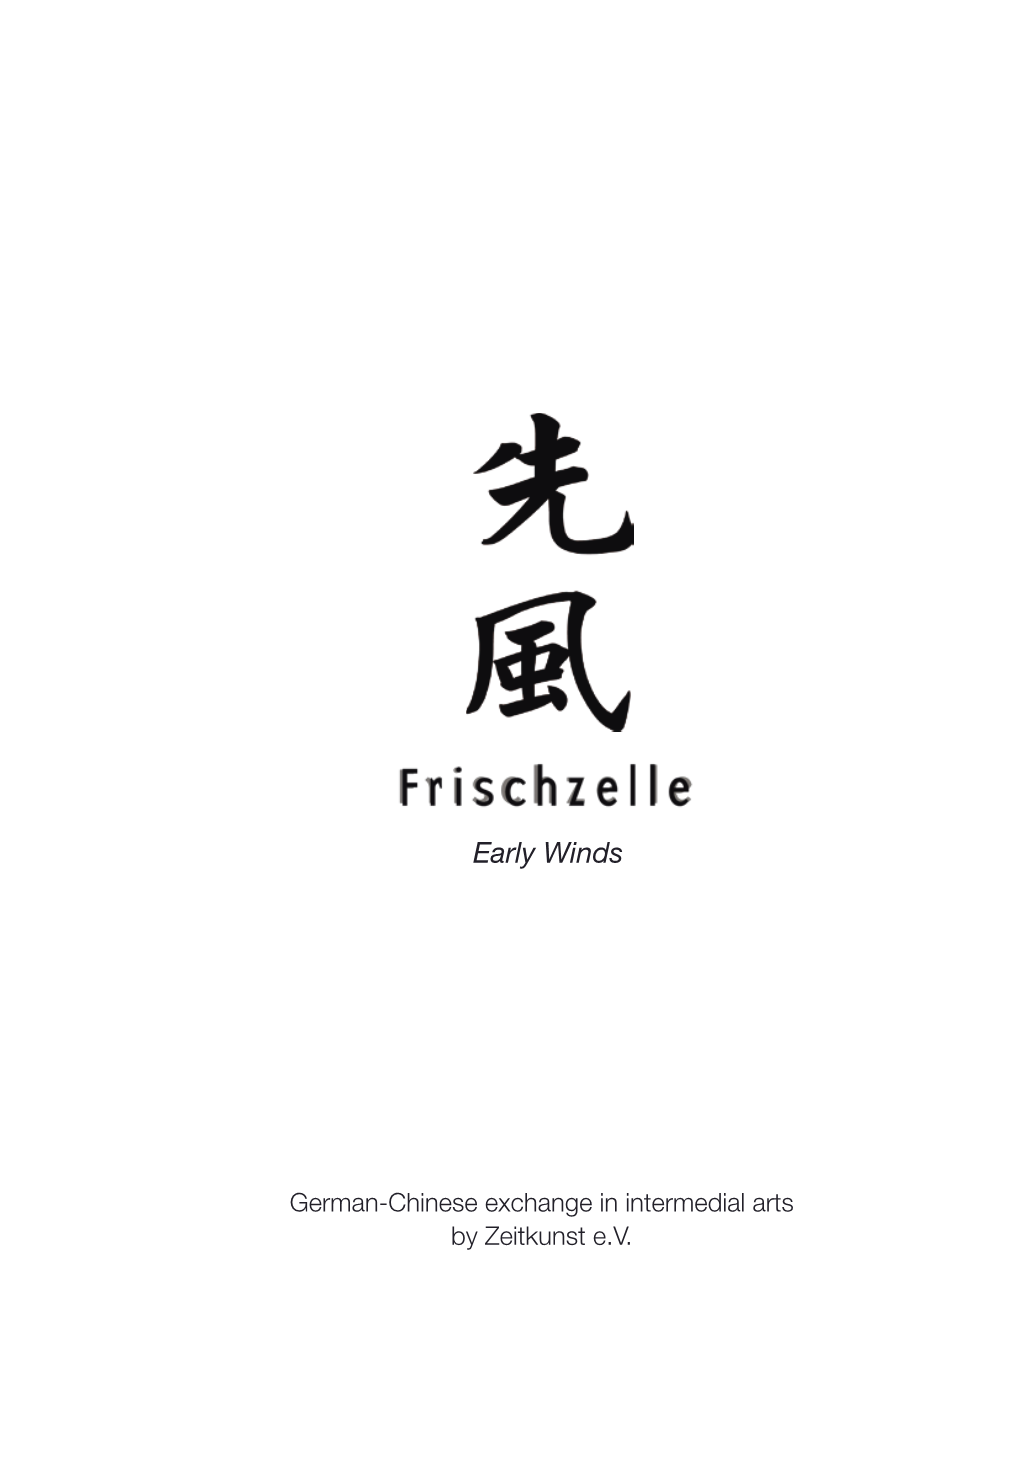 German-Chinese Exchange in Intermedial Arts by Zeitkunst E.V